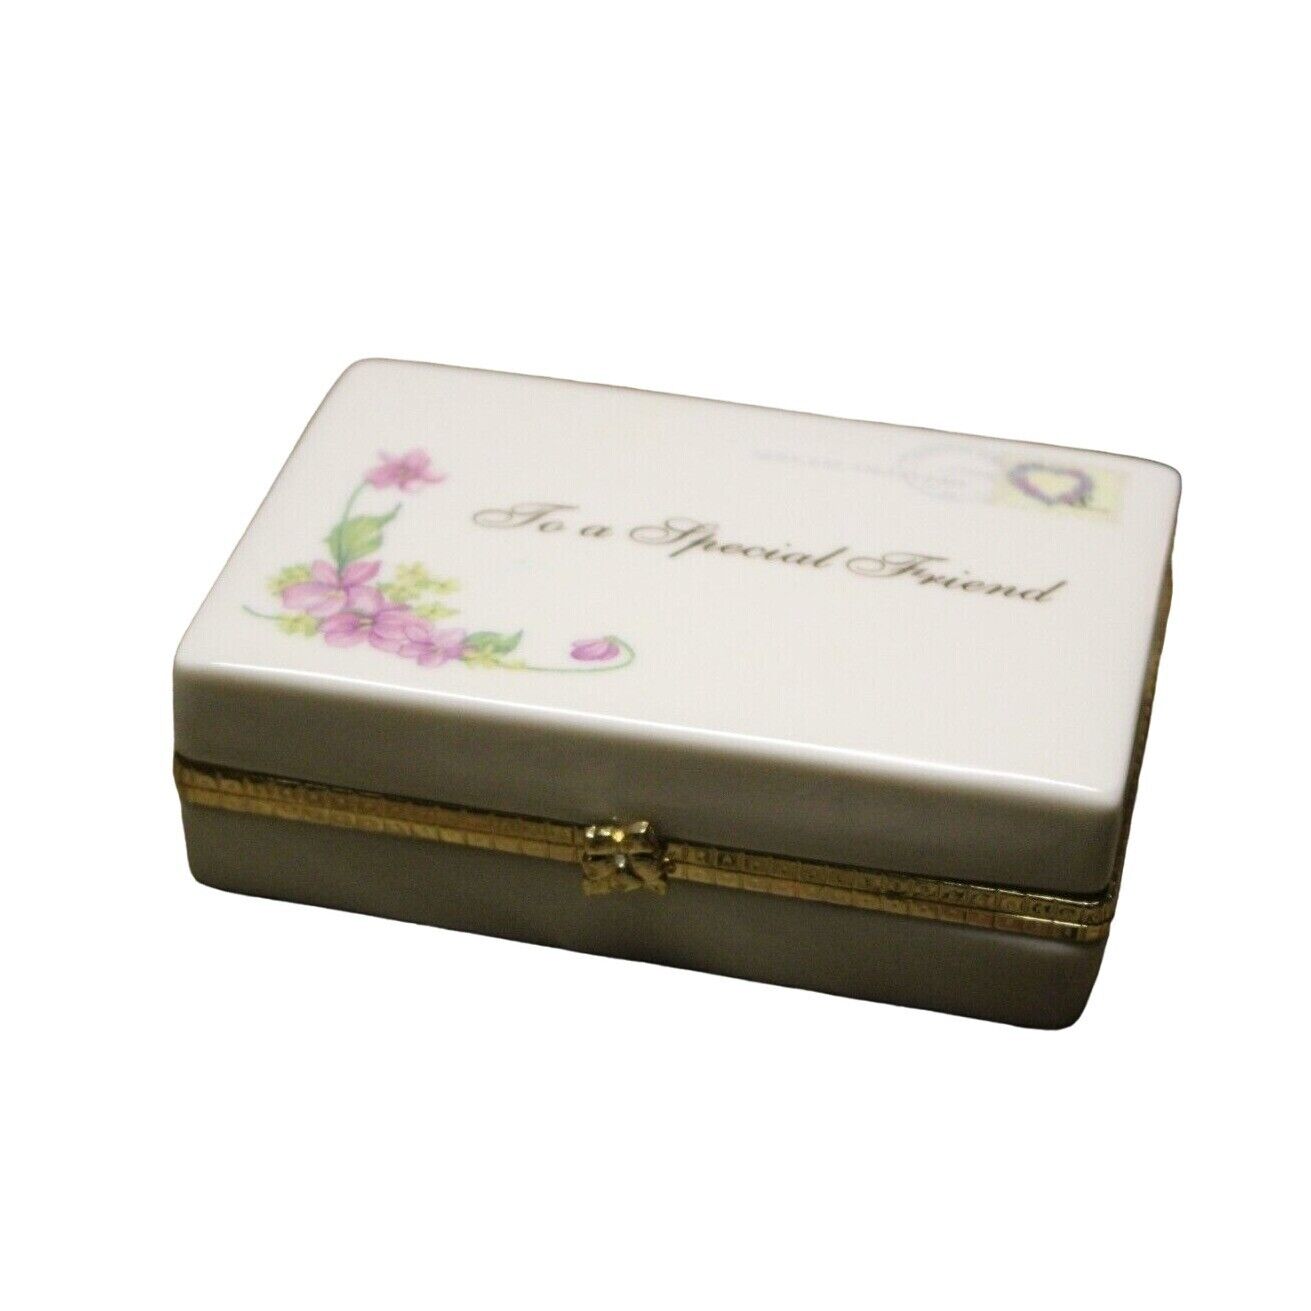 Heirloom Porcelain Music Box 2005 Ardleigh Elliott - “To a Special Friend”